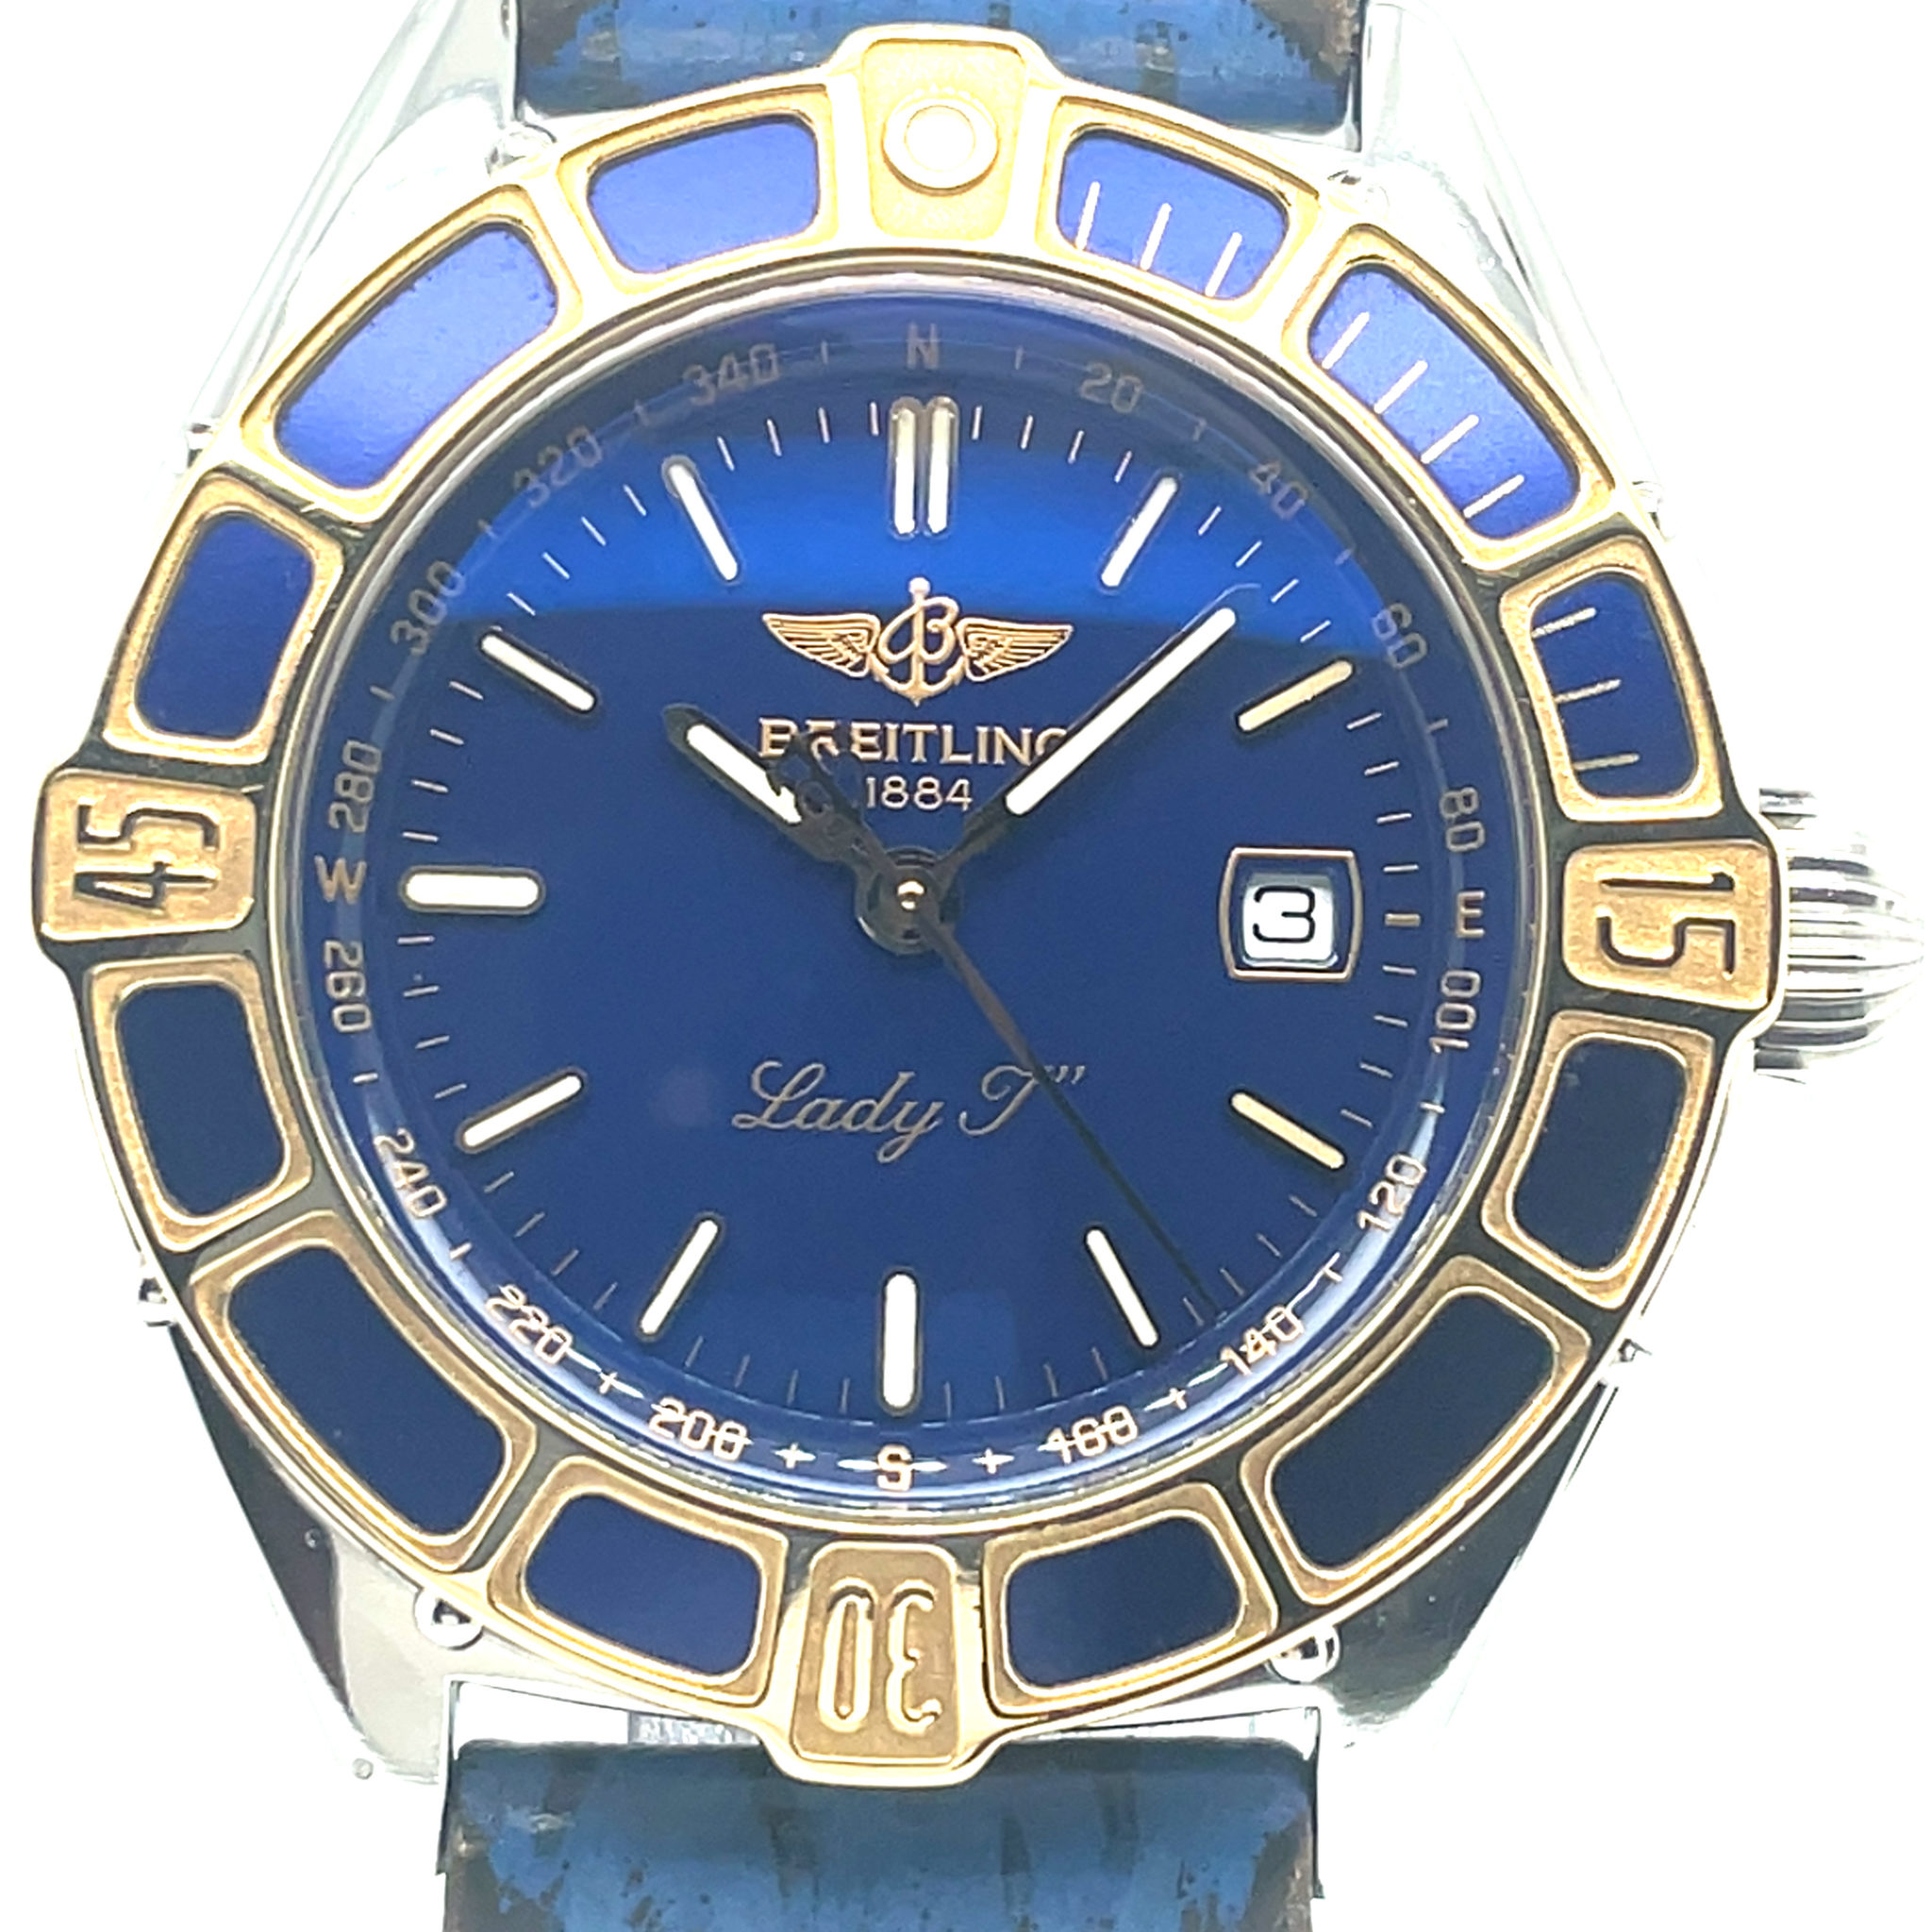 Breitling Lady J Class Ref. D52065 ca. 1998 Stahl/Gold Quarz Vintage Watch